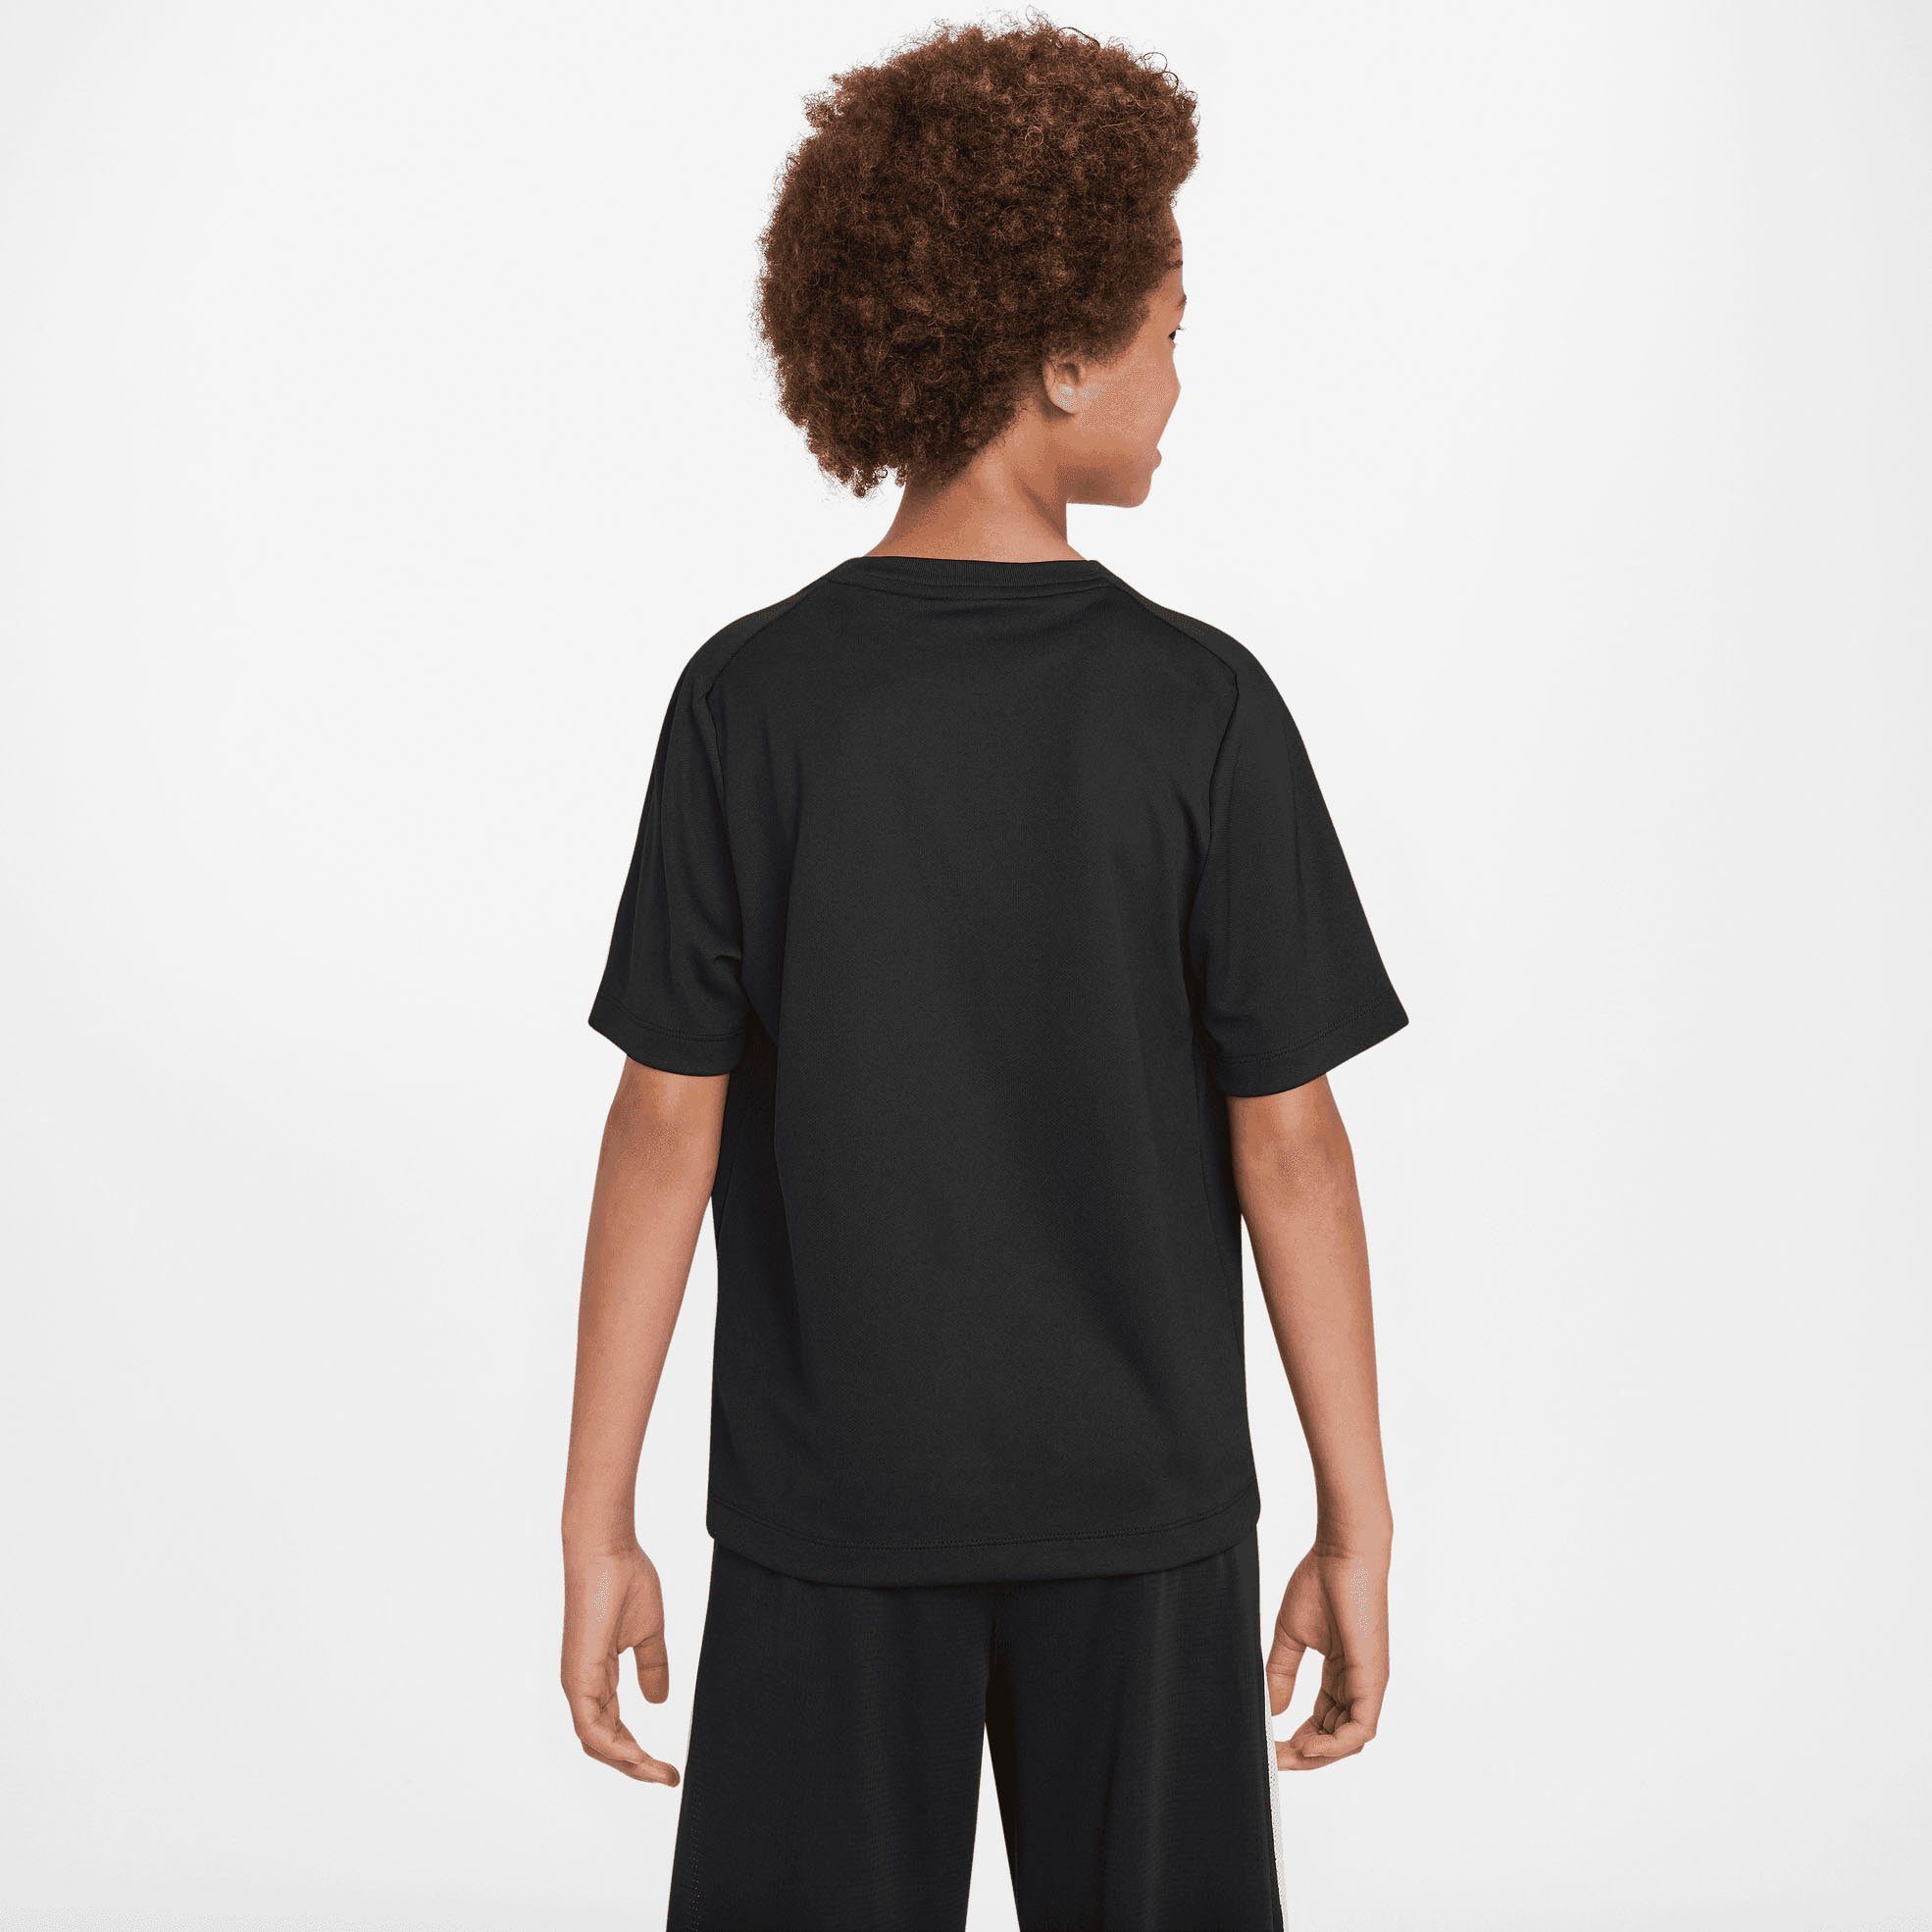 KIDS' (BOYS) TOP Trainingsshirt BLACK/WHITE BIG TRAINING GRAPHIC Nike MULTI+ DRI-FIT